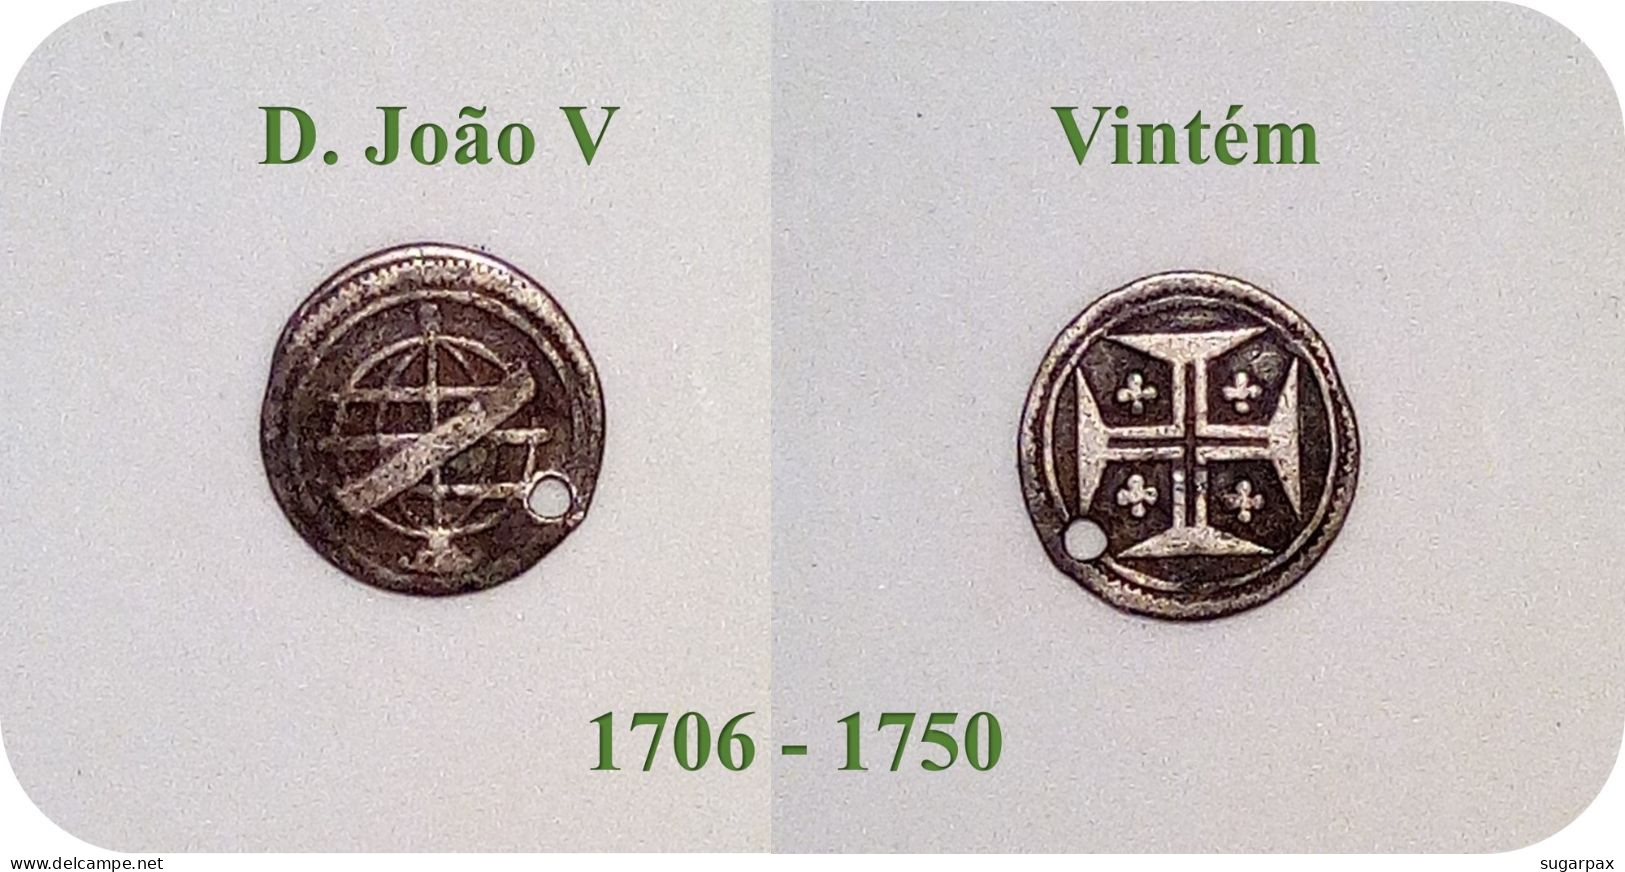 D. João V - Vintém - N/D ( 1706 - 1750 ) - KM # 235 - SILVER ( Ag 916,6 ) - A.G. 38.02 - Monarquia Portugal - Portugal